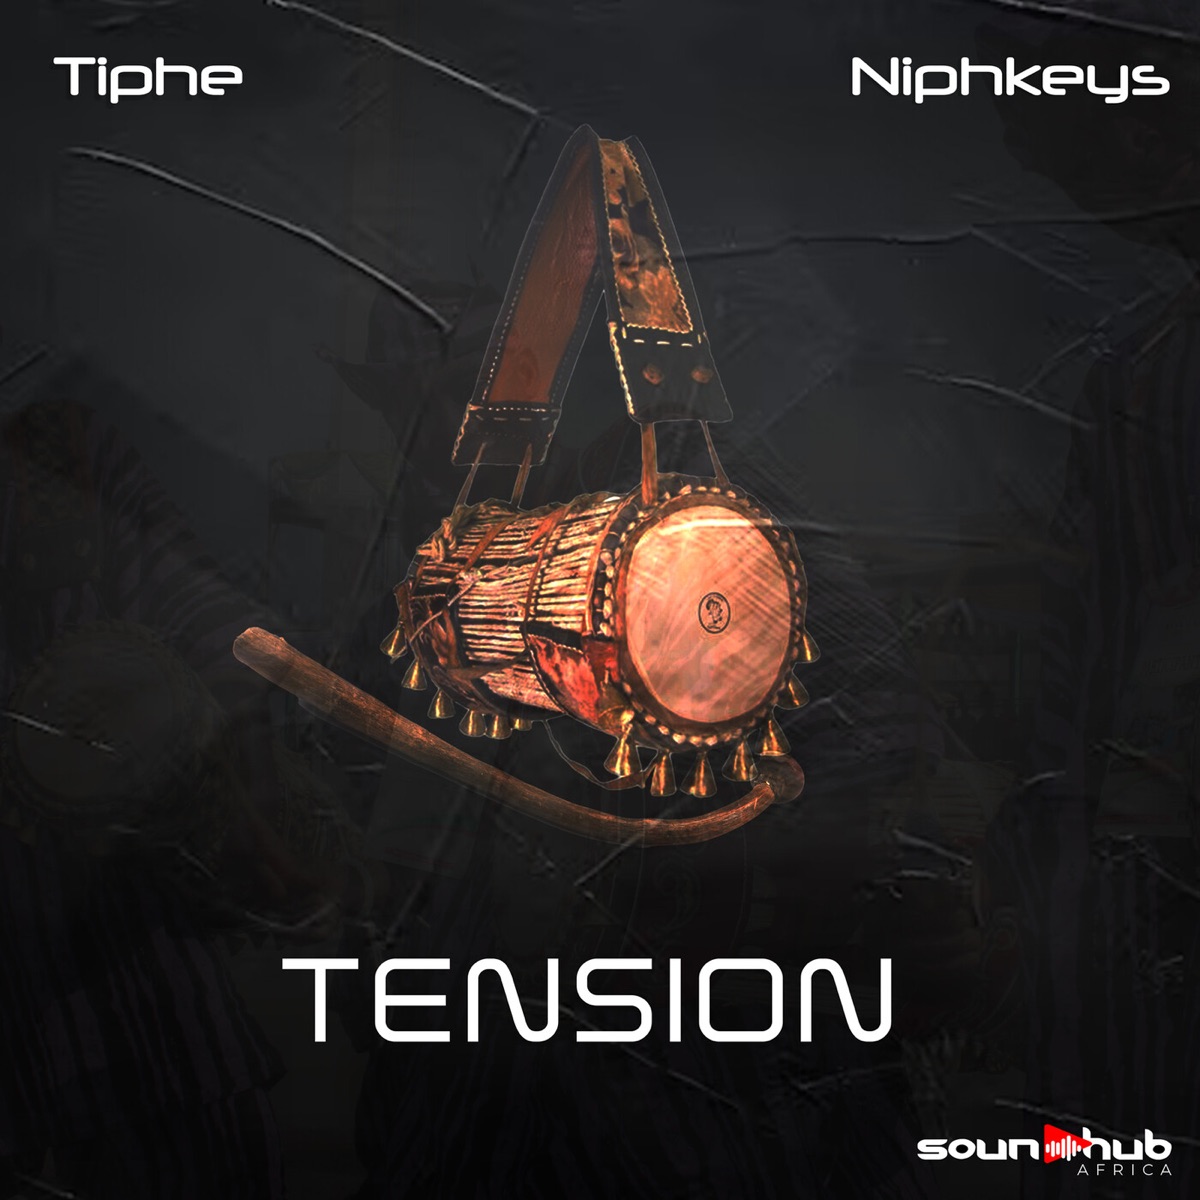 Tiphe – Tension Ft. Niphkeys